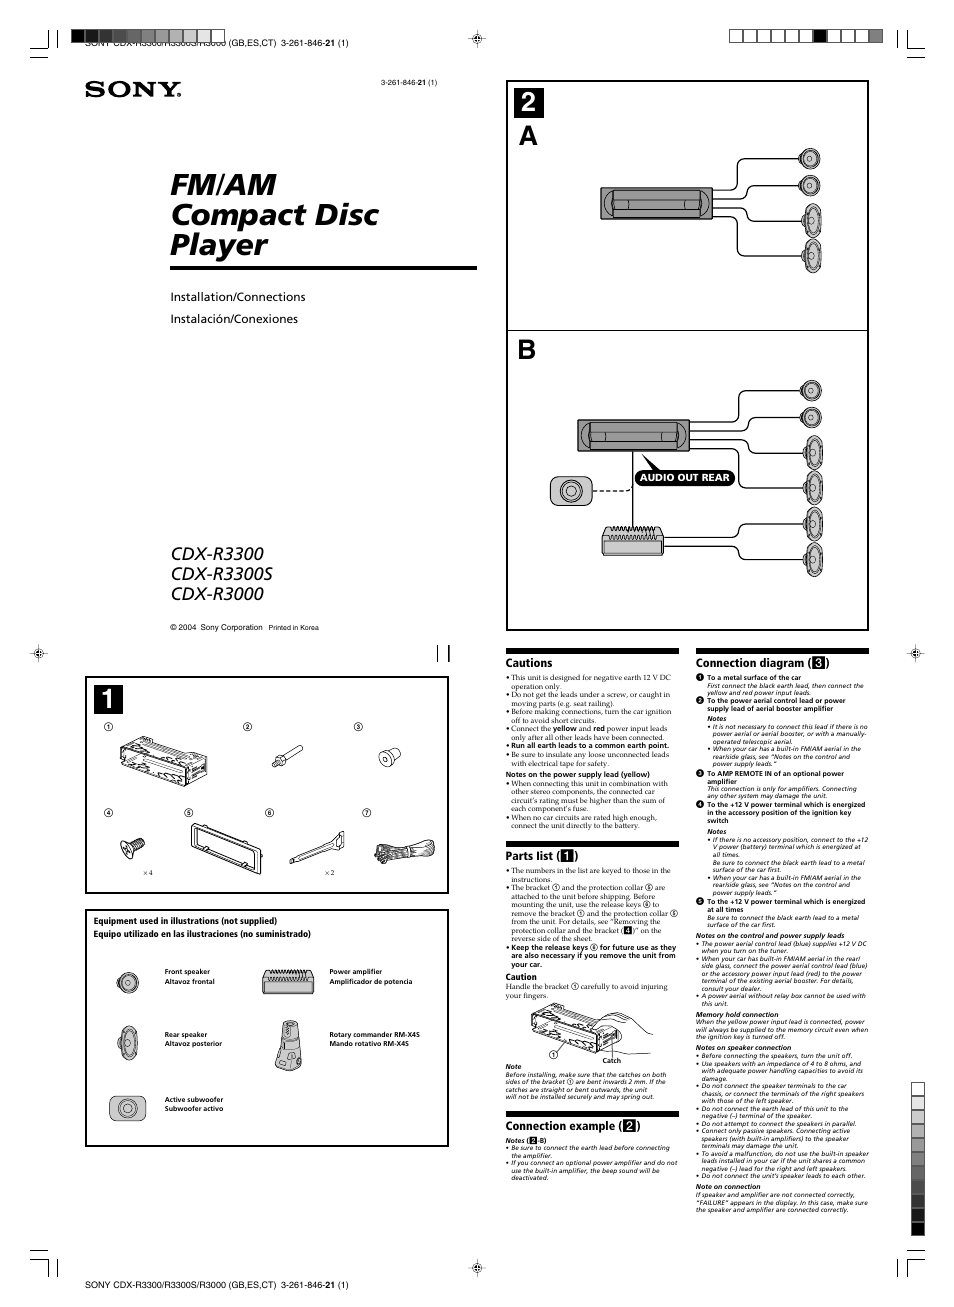 Sony Cdx Gt700Hd Wiring Diagram from www.manualsdir.com